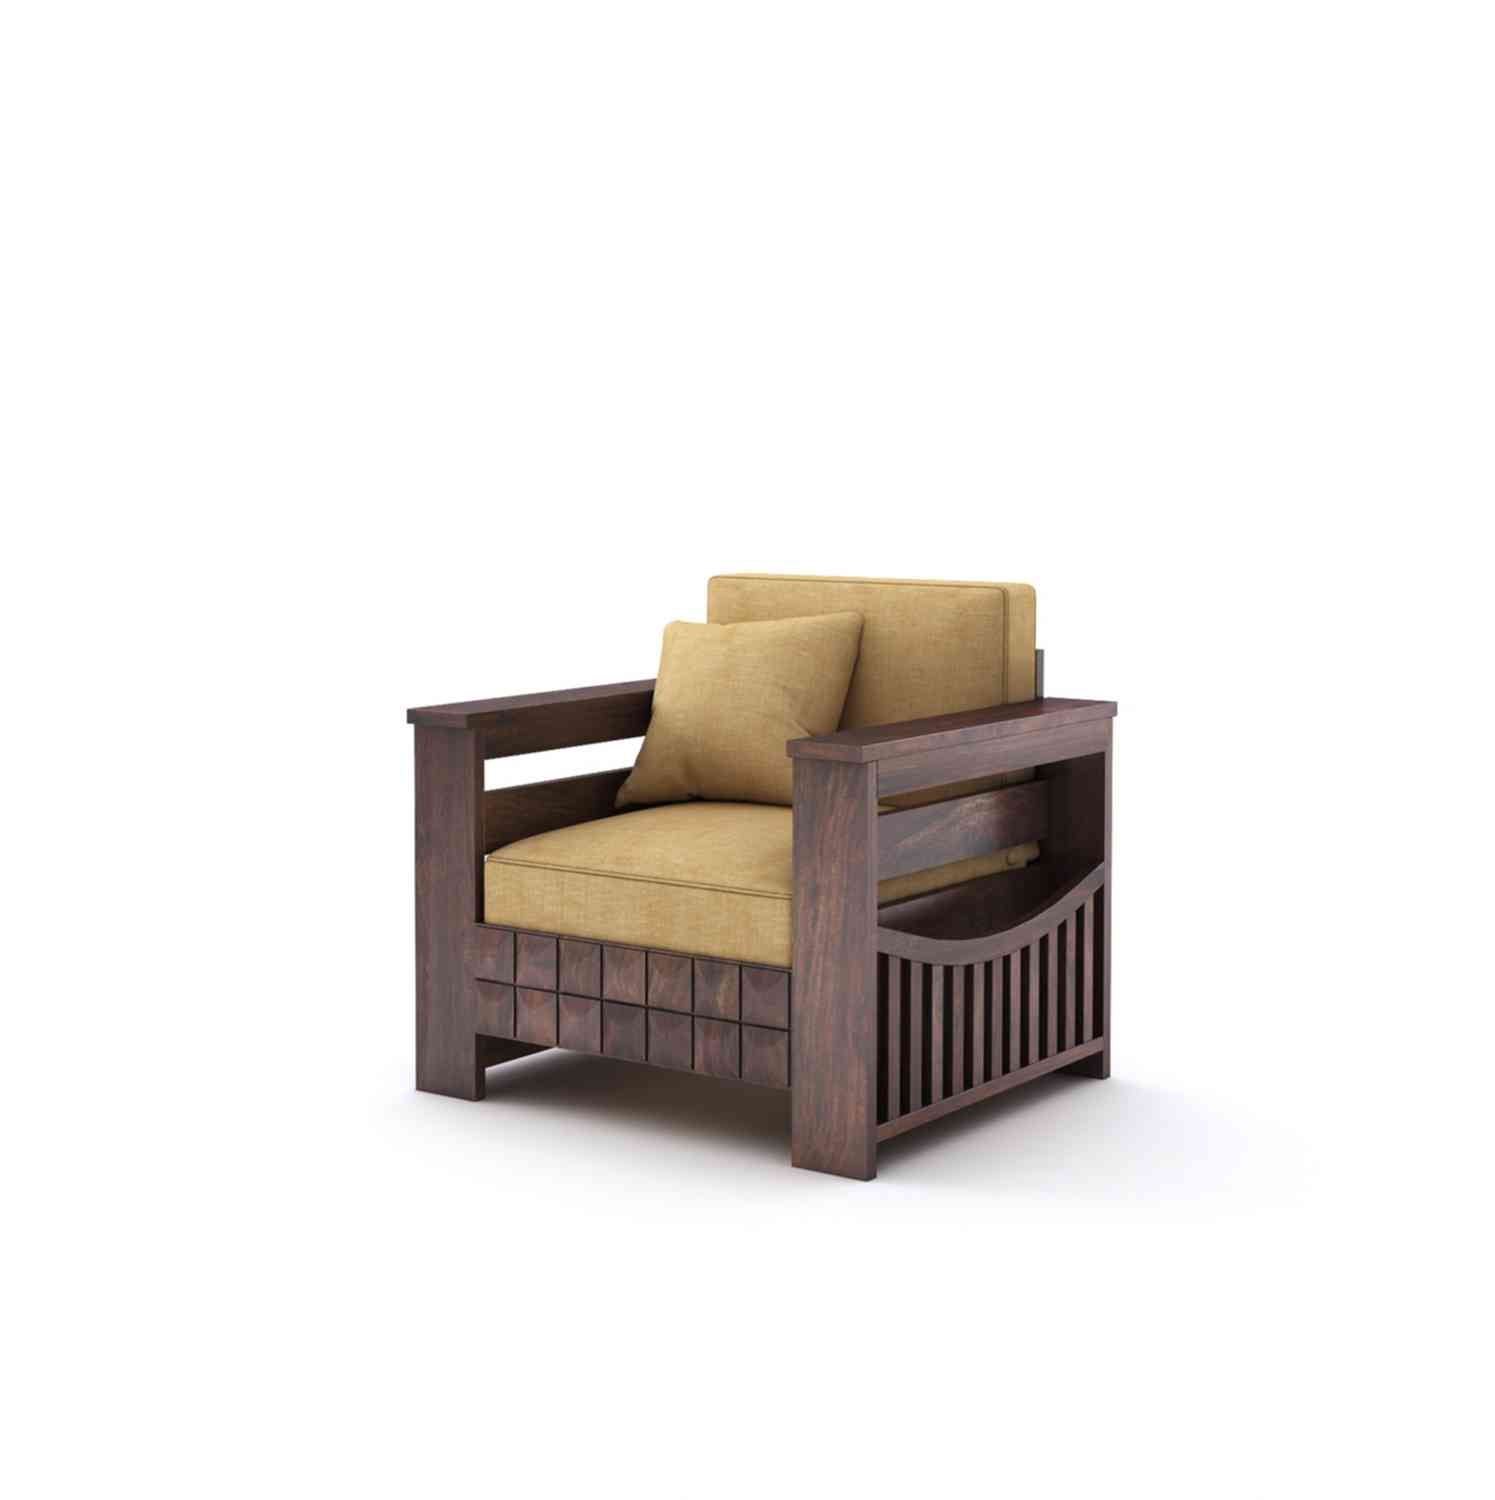 Sofia Solid Sheesham Wood 5 Seater Sofa Set With Coffee Table (Walnut Finish, 3+1+1)